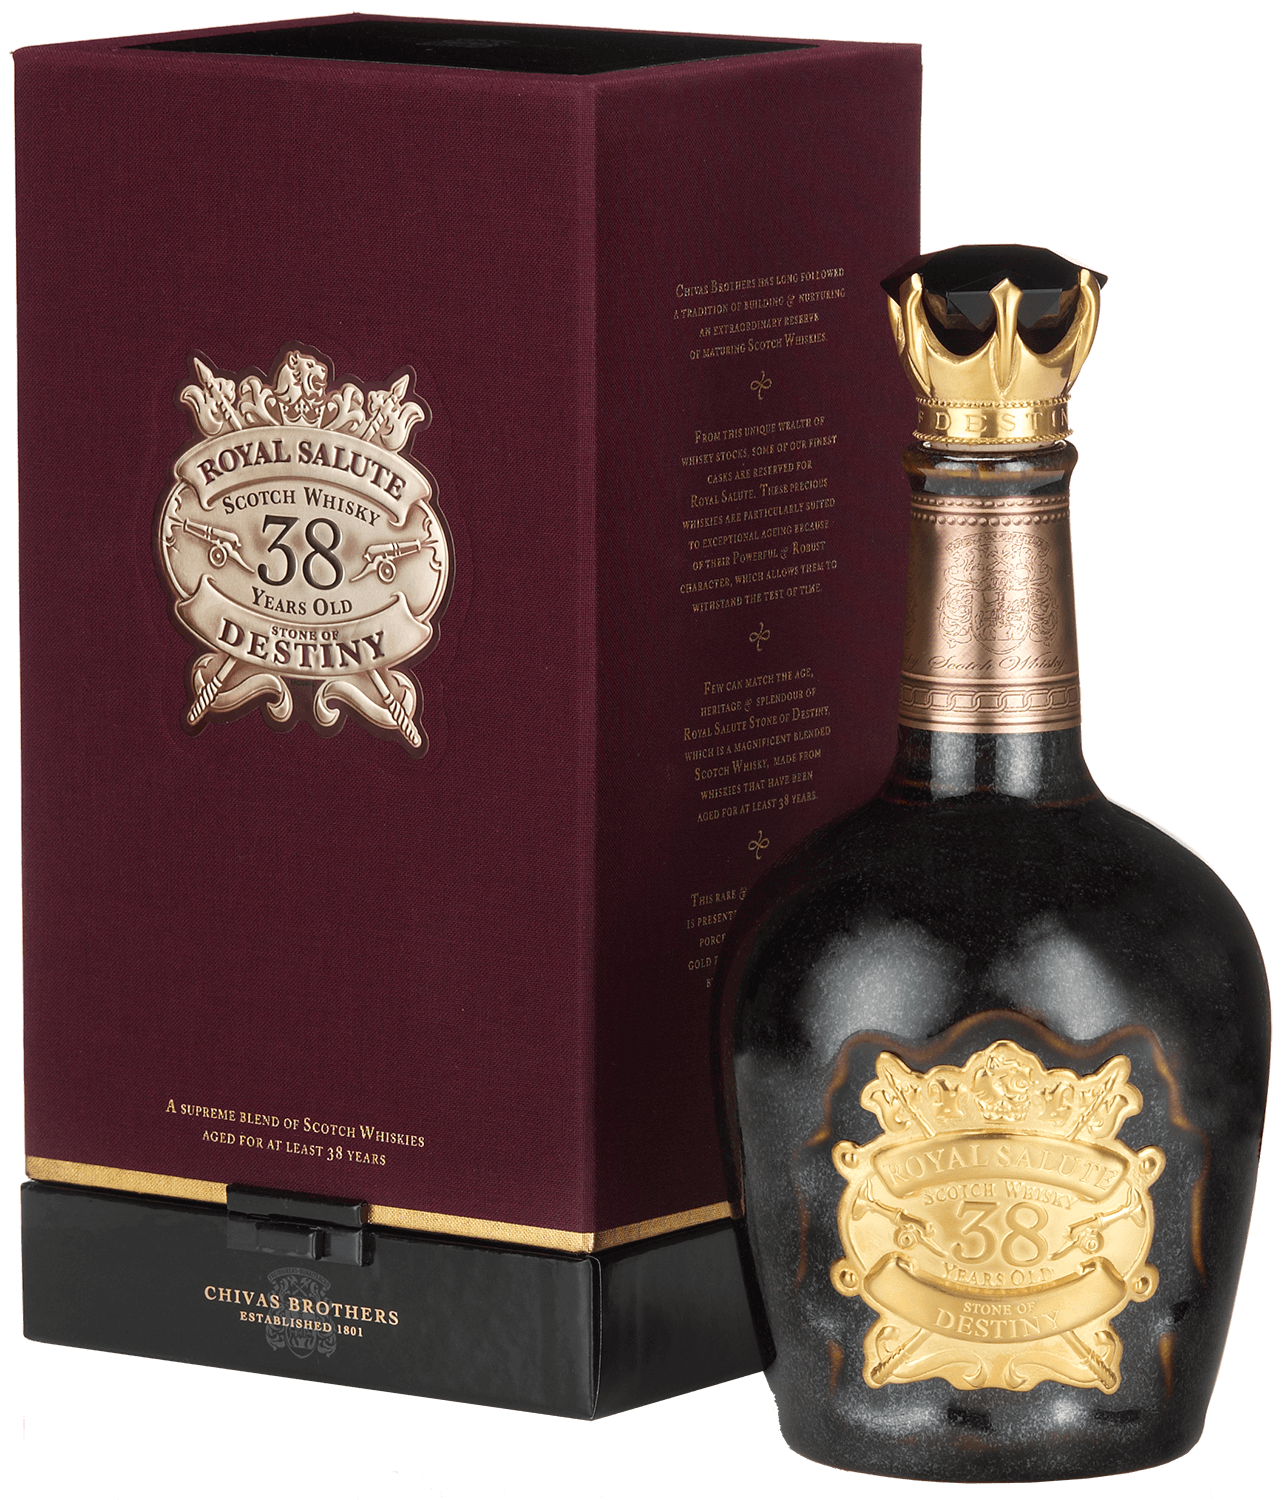 Chivas Regal Royal Salute Stone of Destiny 38 y.o. blended scotch whisky (gift box) royal salute blended scotch whisky 21 y o gift box